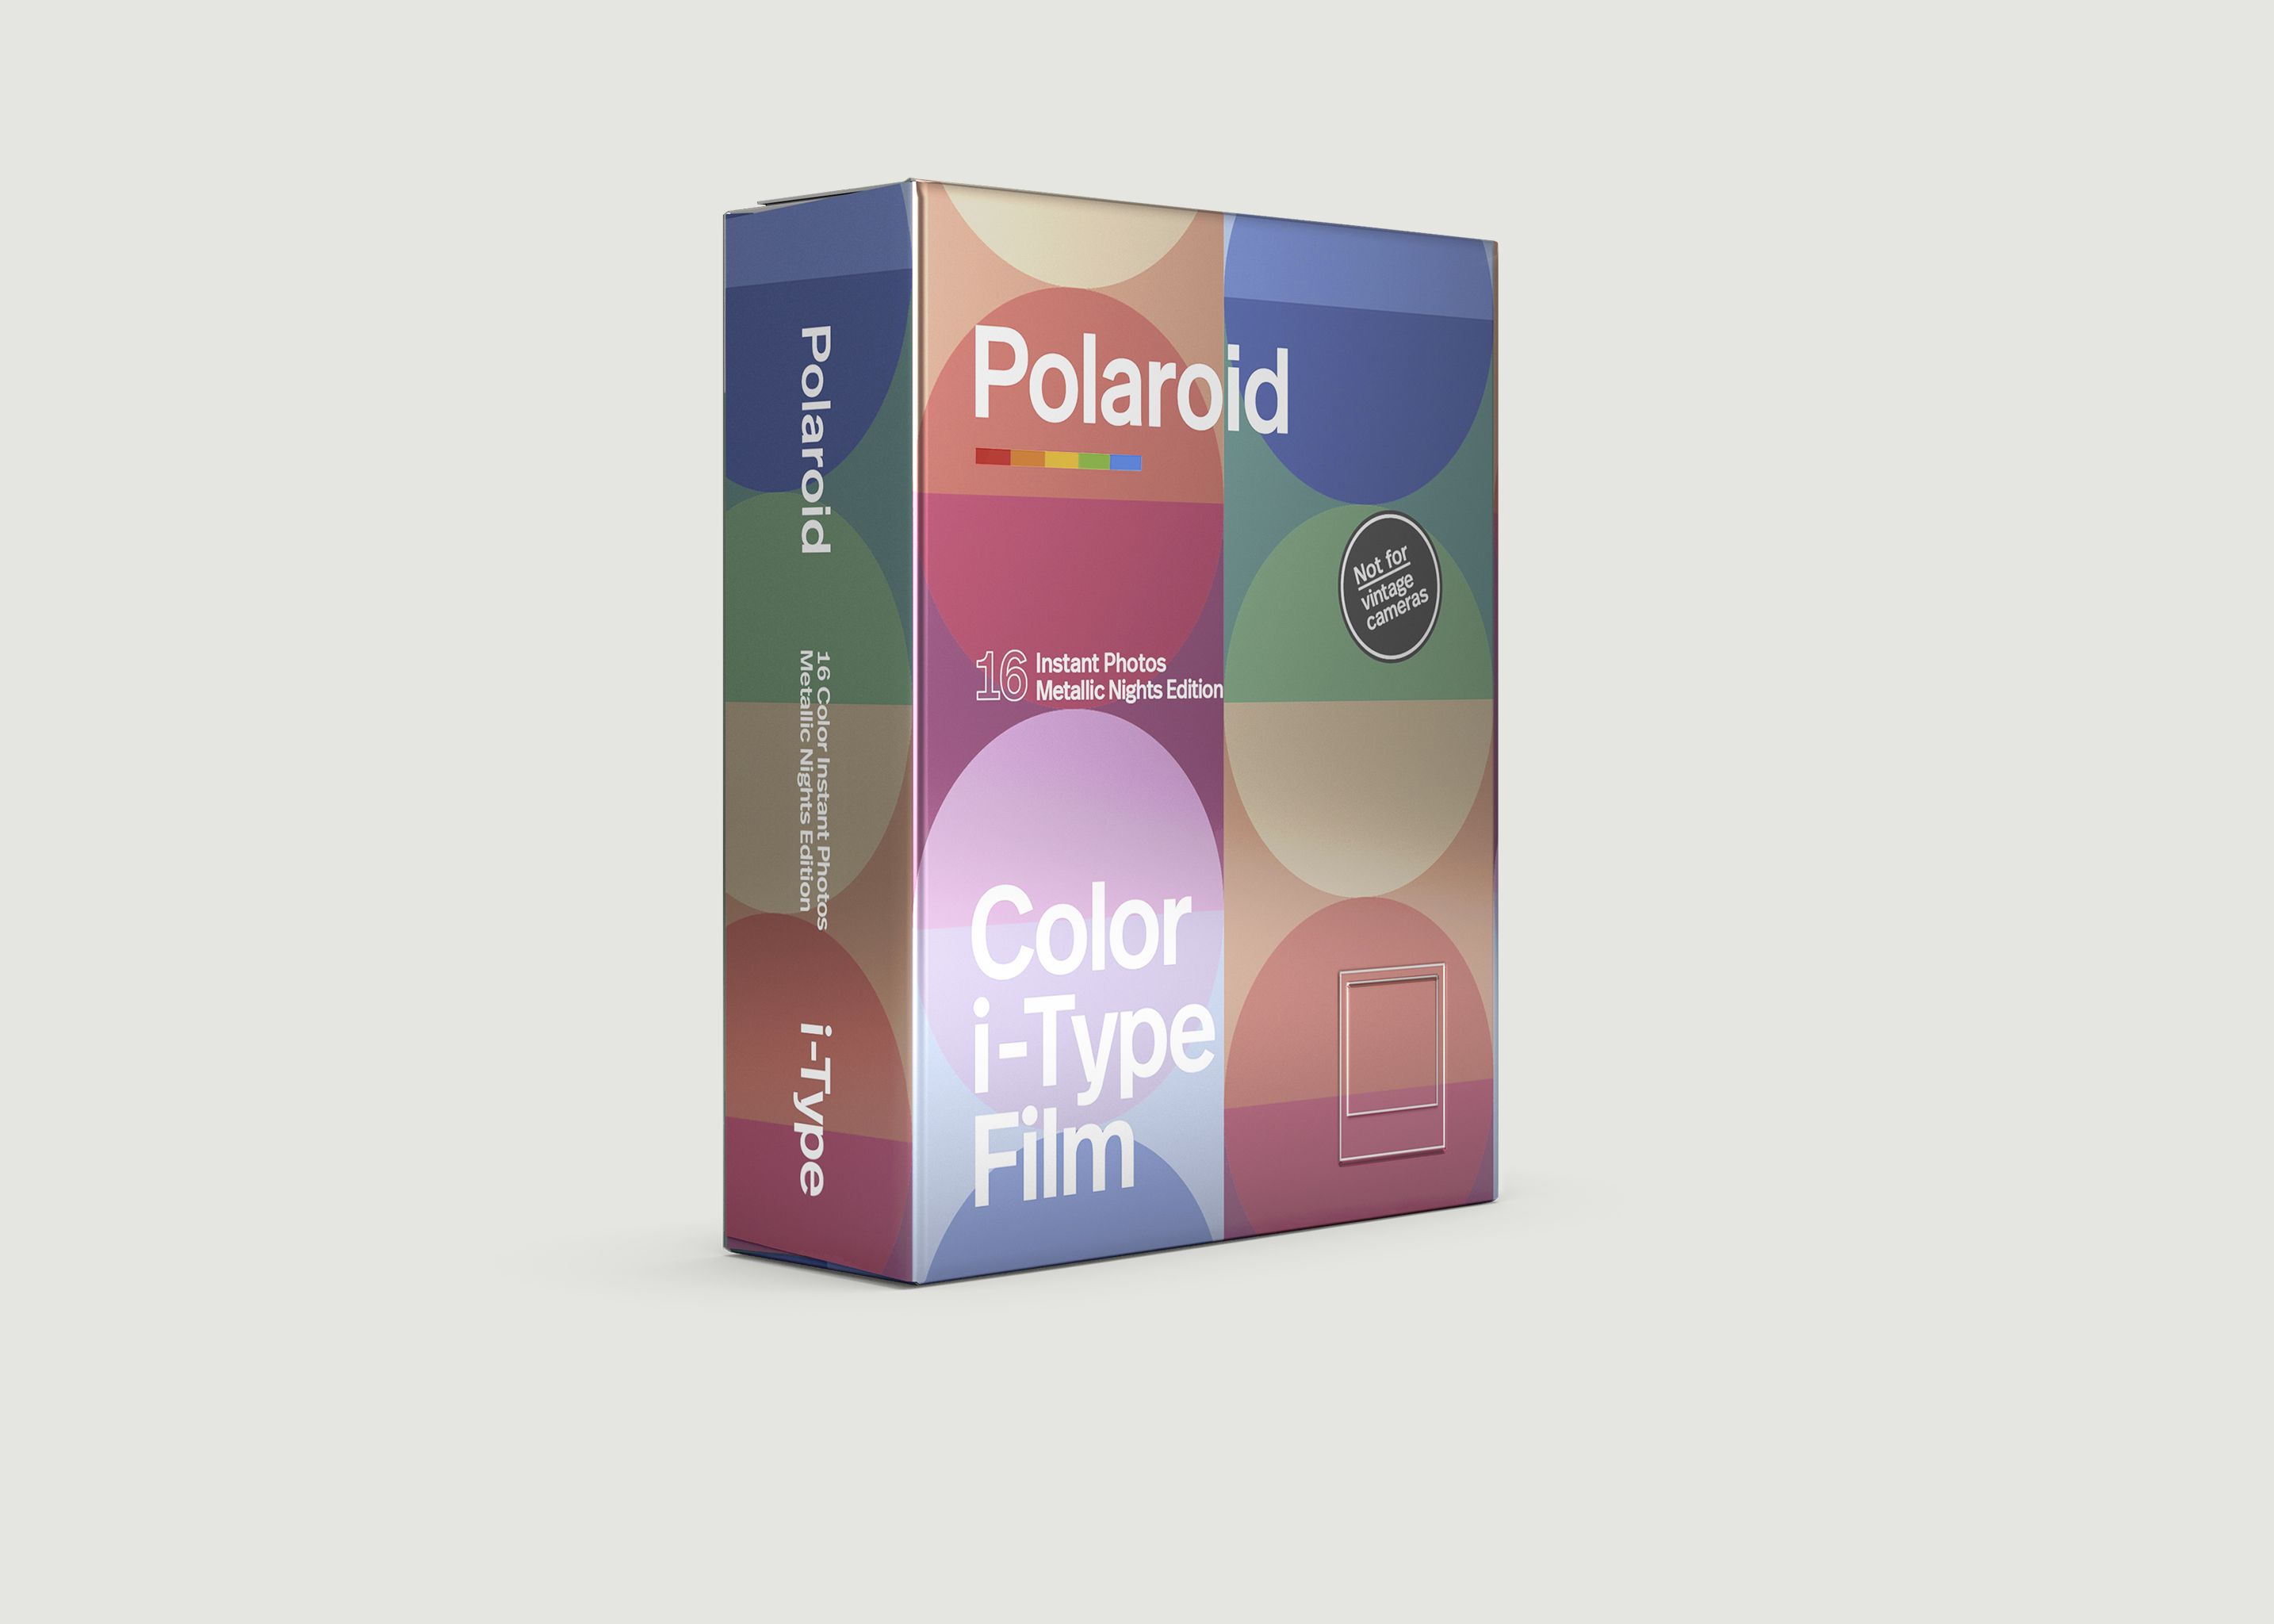 Film I-Type - MetallicNights Double Pack - Polaroid Originals